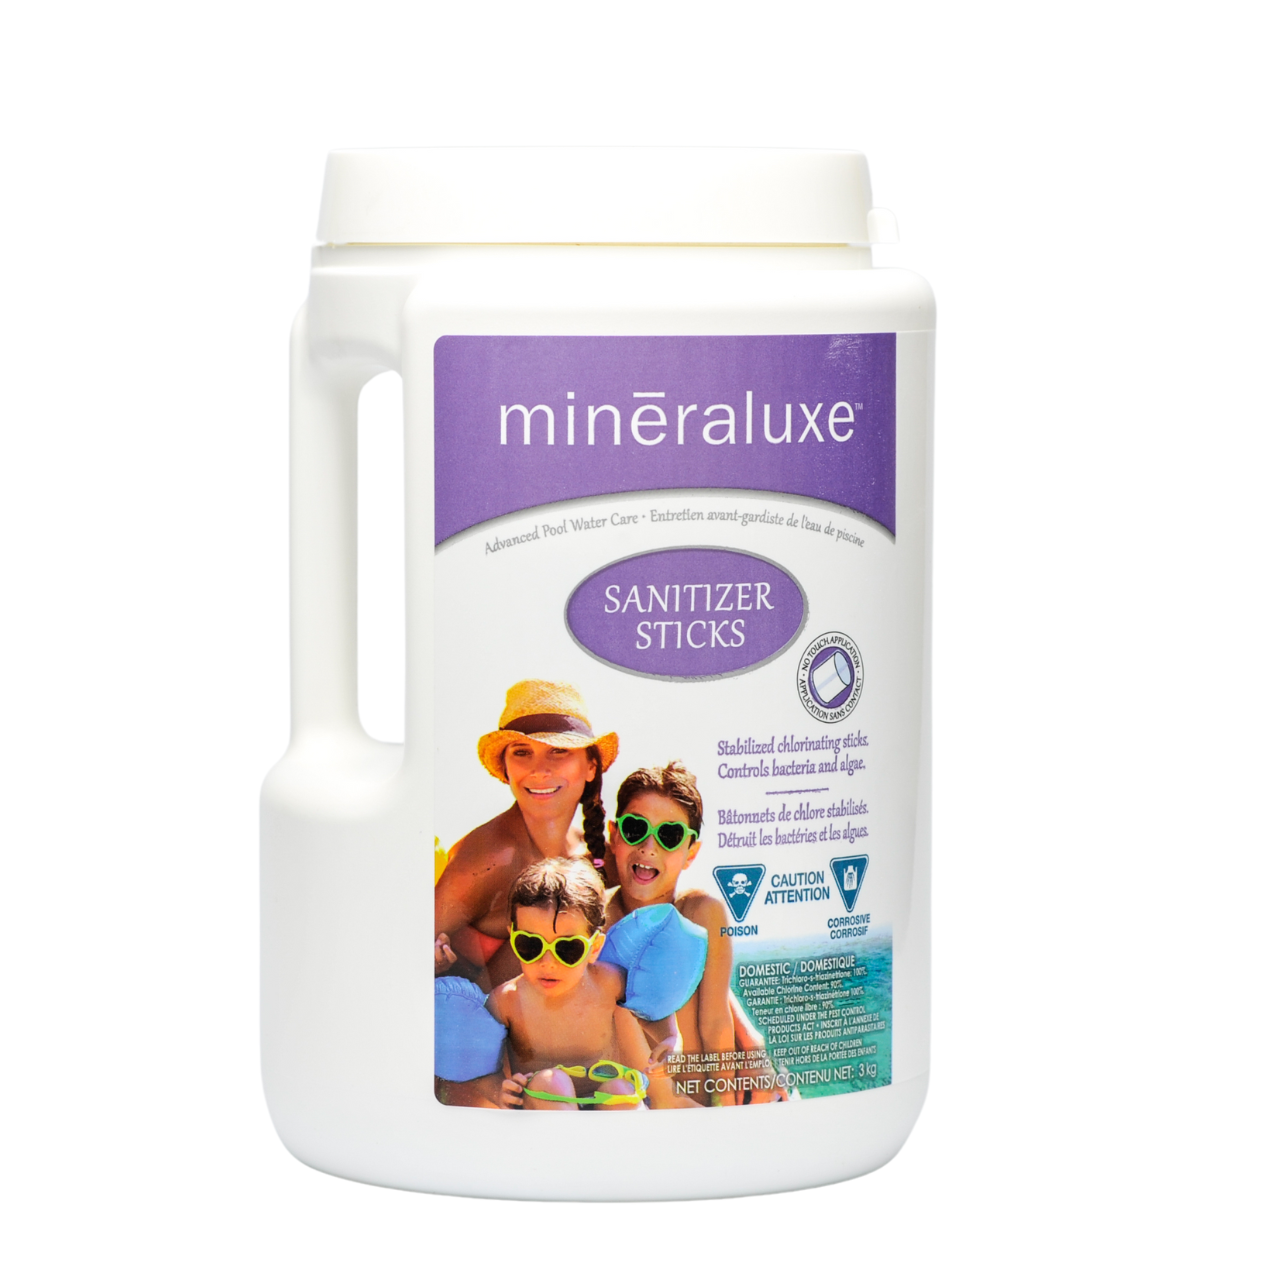 Mineraluxe Sanitizer Sticks - Stabilized chlorinating sticks